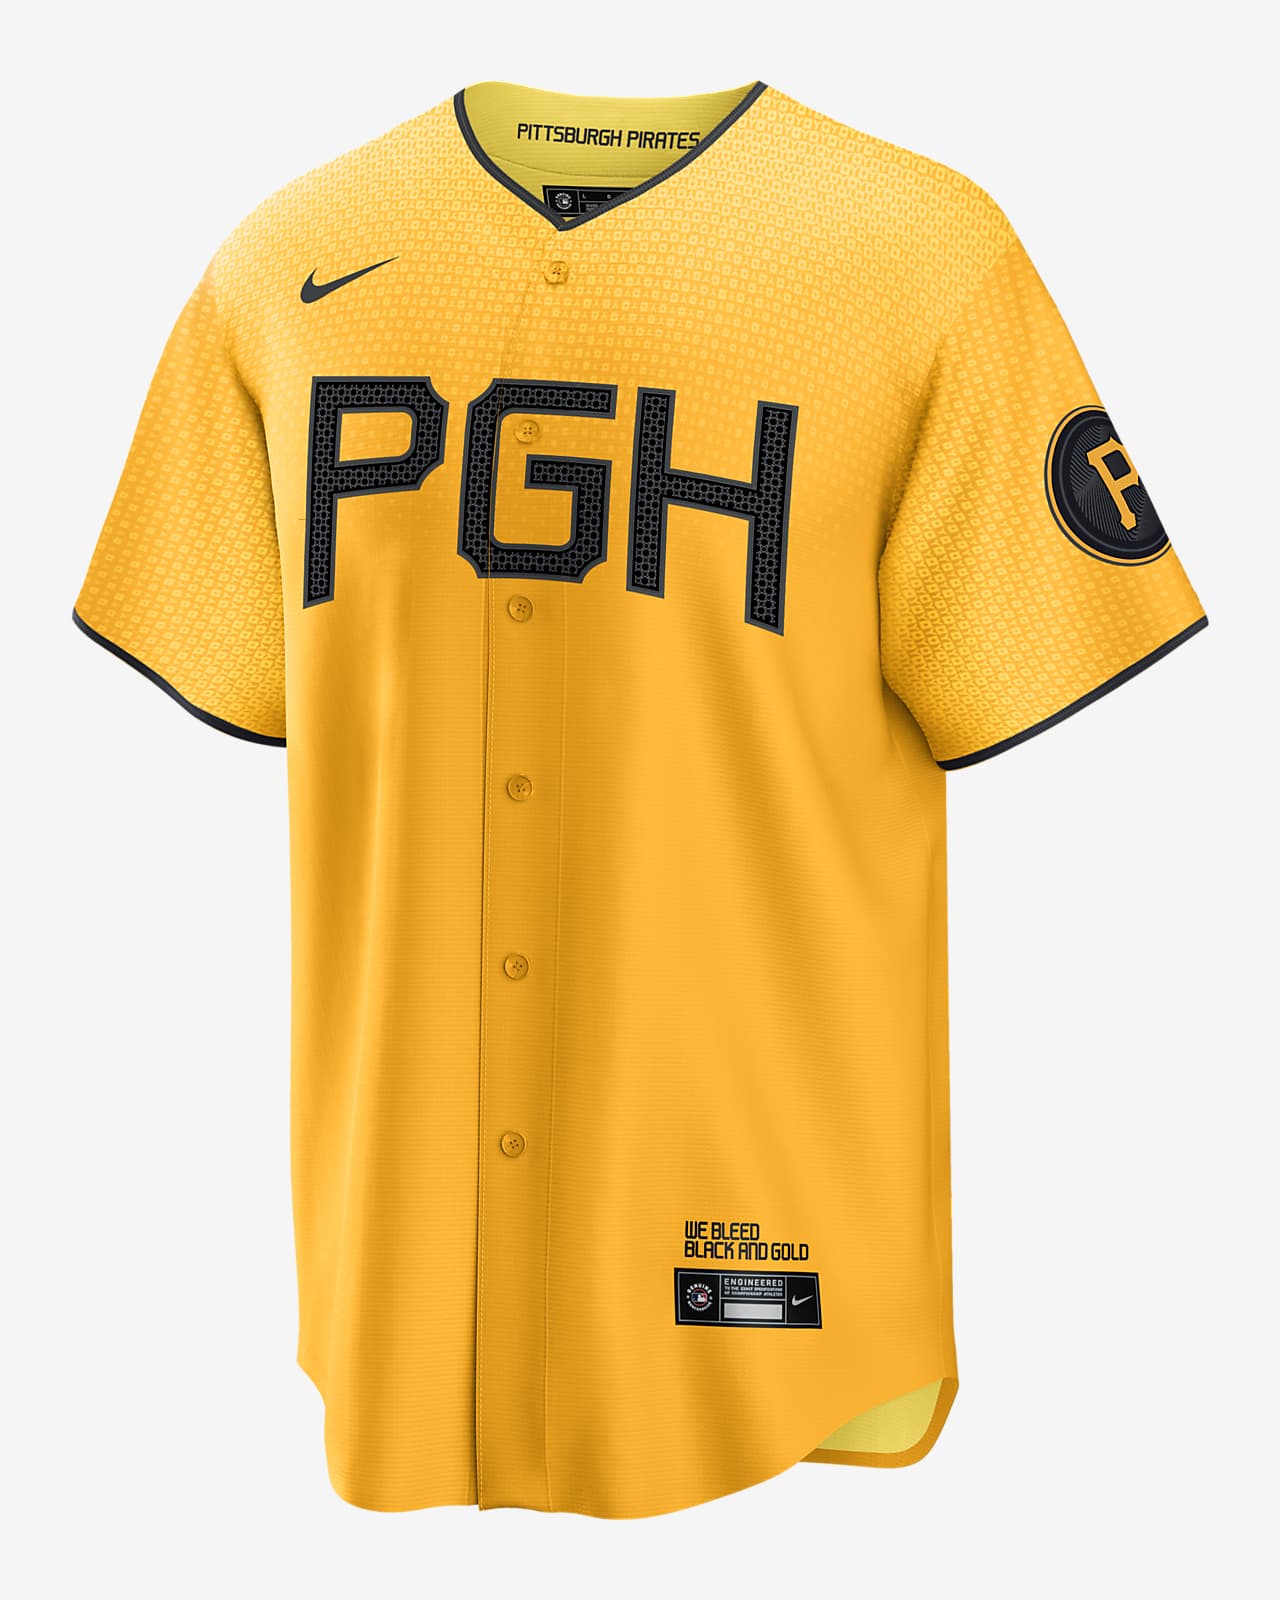 MLB Pittsburgh Pirates City Connect (Ke'Bryan Hayes) Men's Replica Baseball Jersey